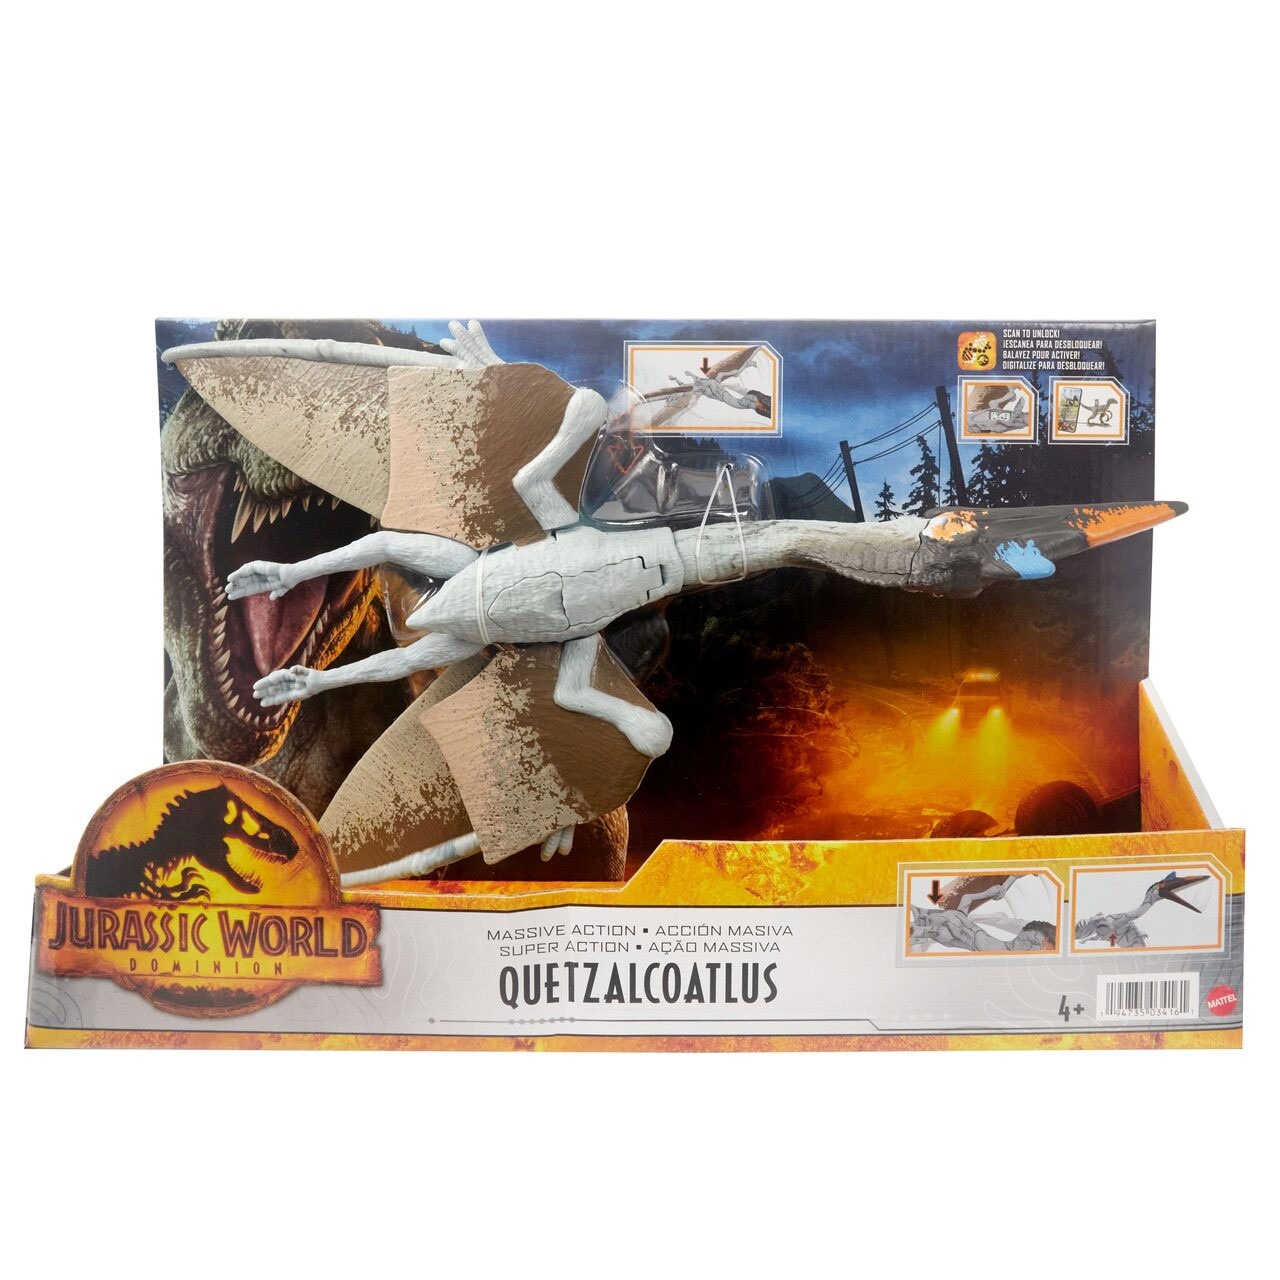 Jurassic World Mega Action Dino Quetzalcoatlus